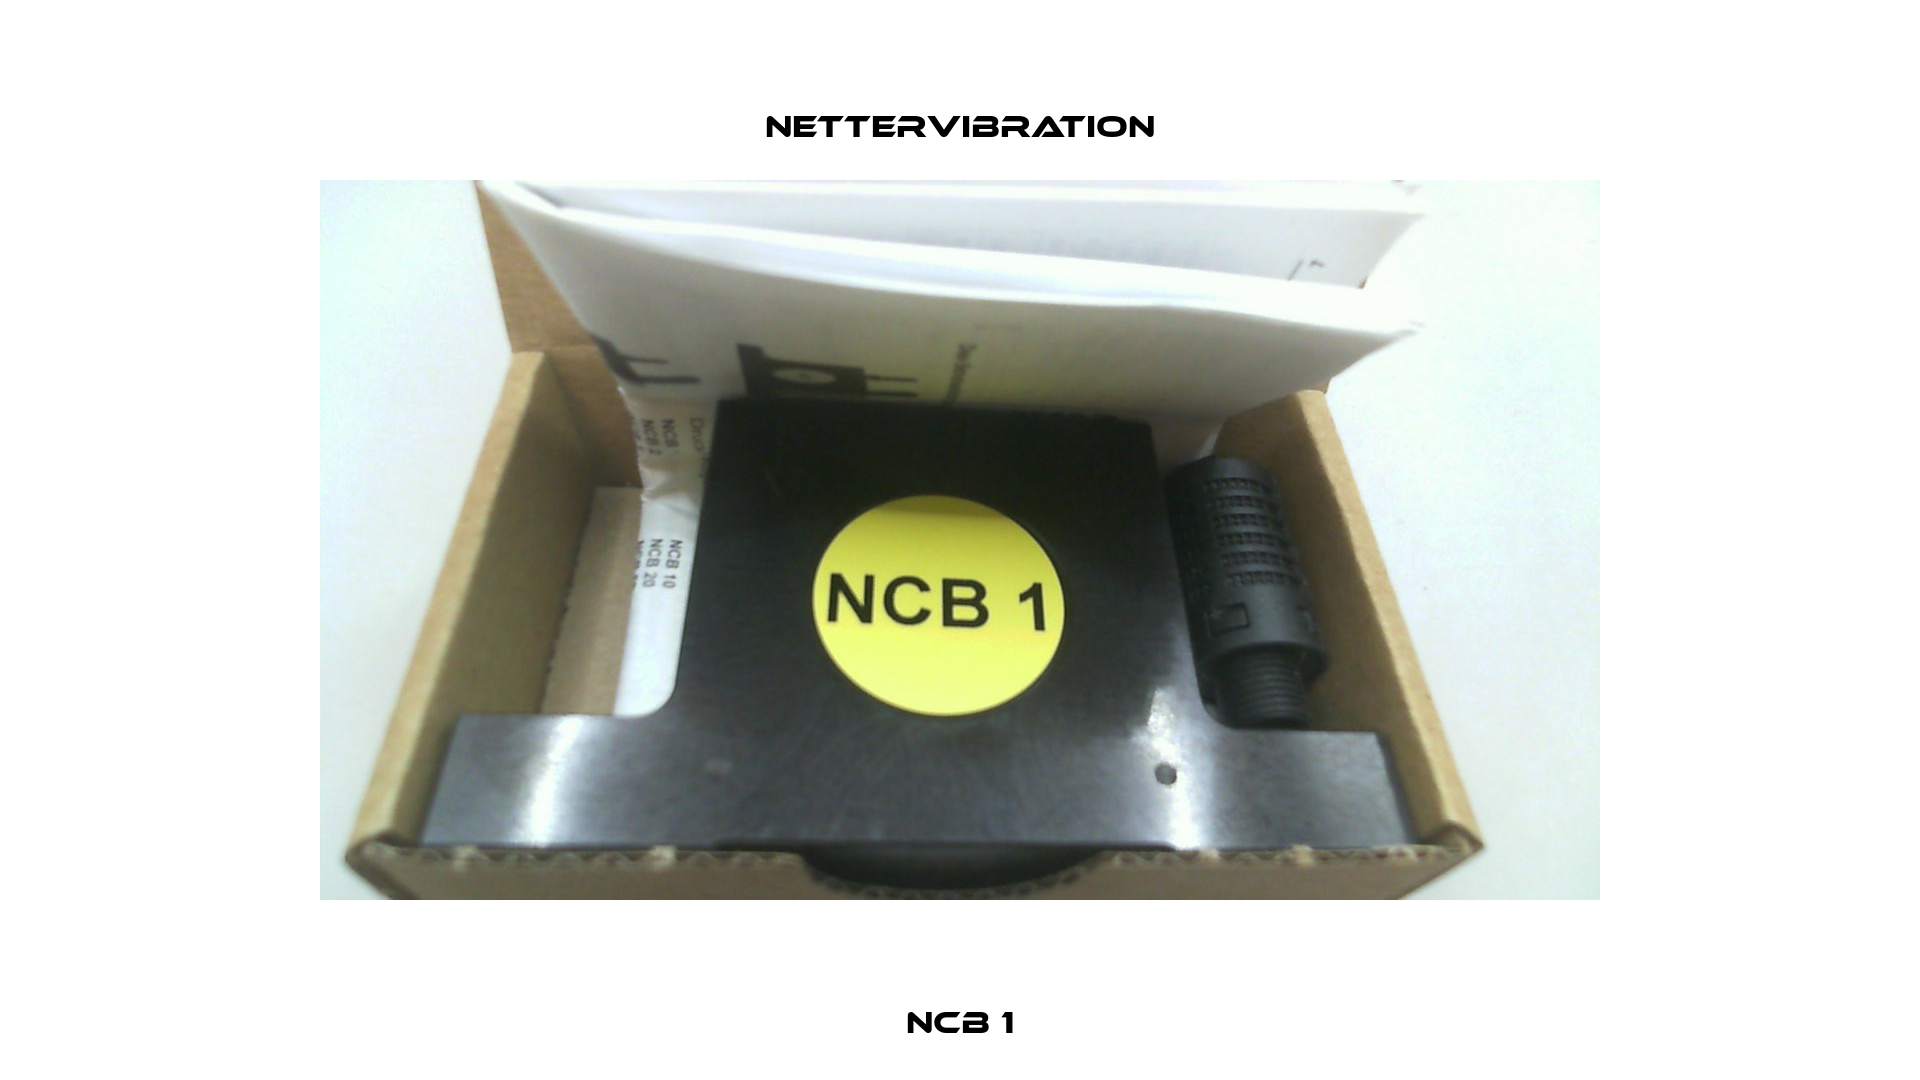 NCB 1 NetterVibration